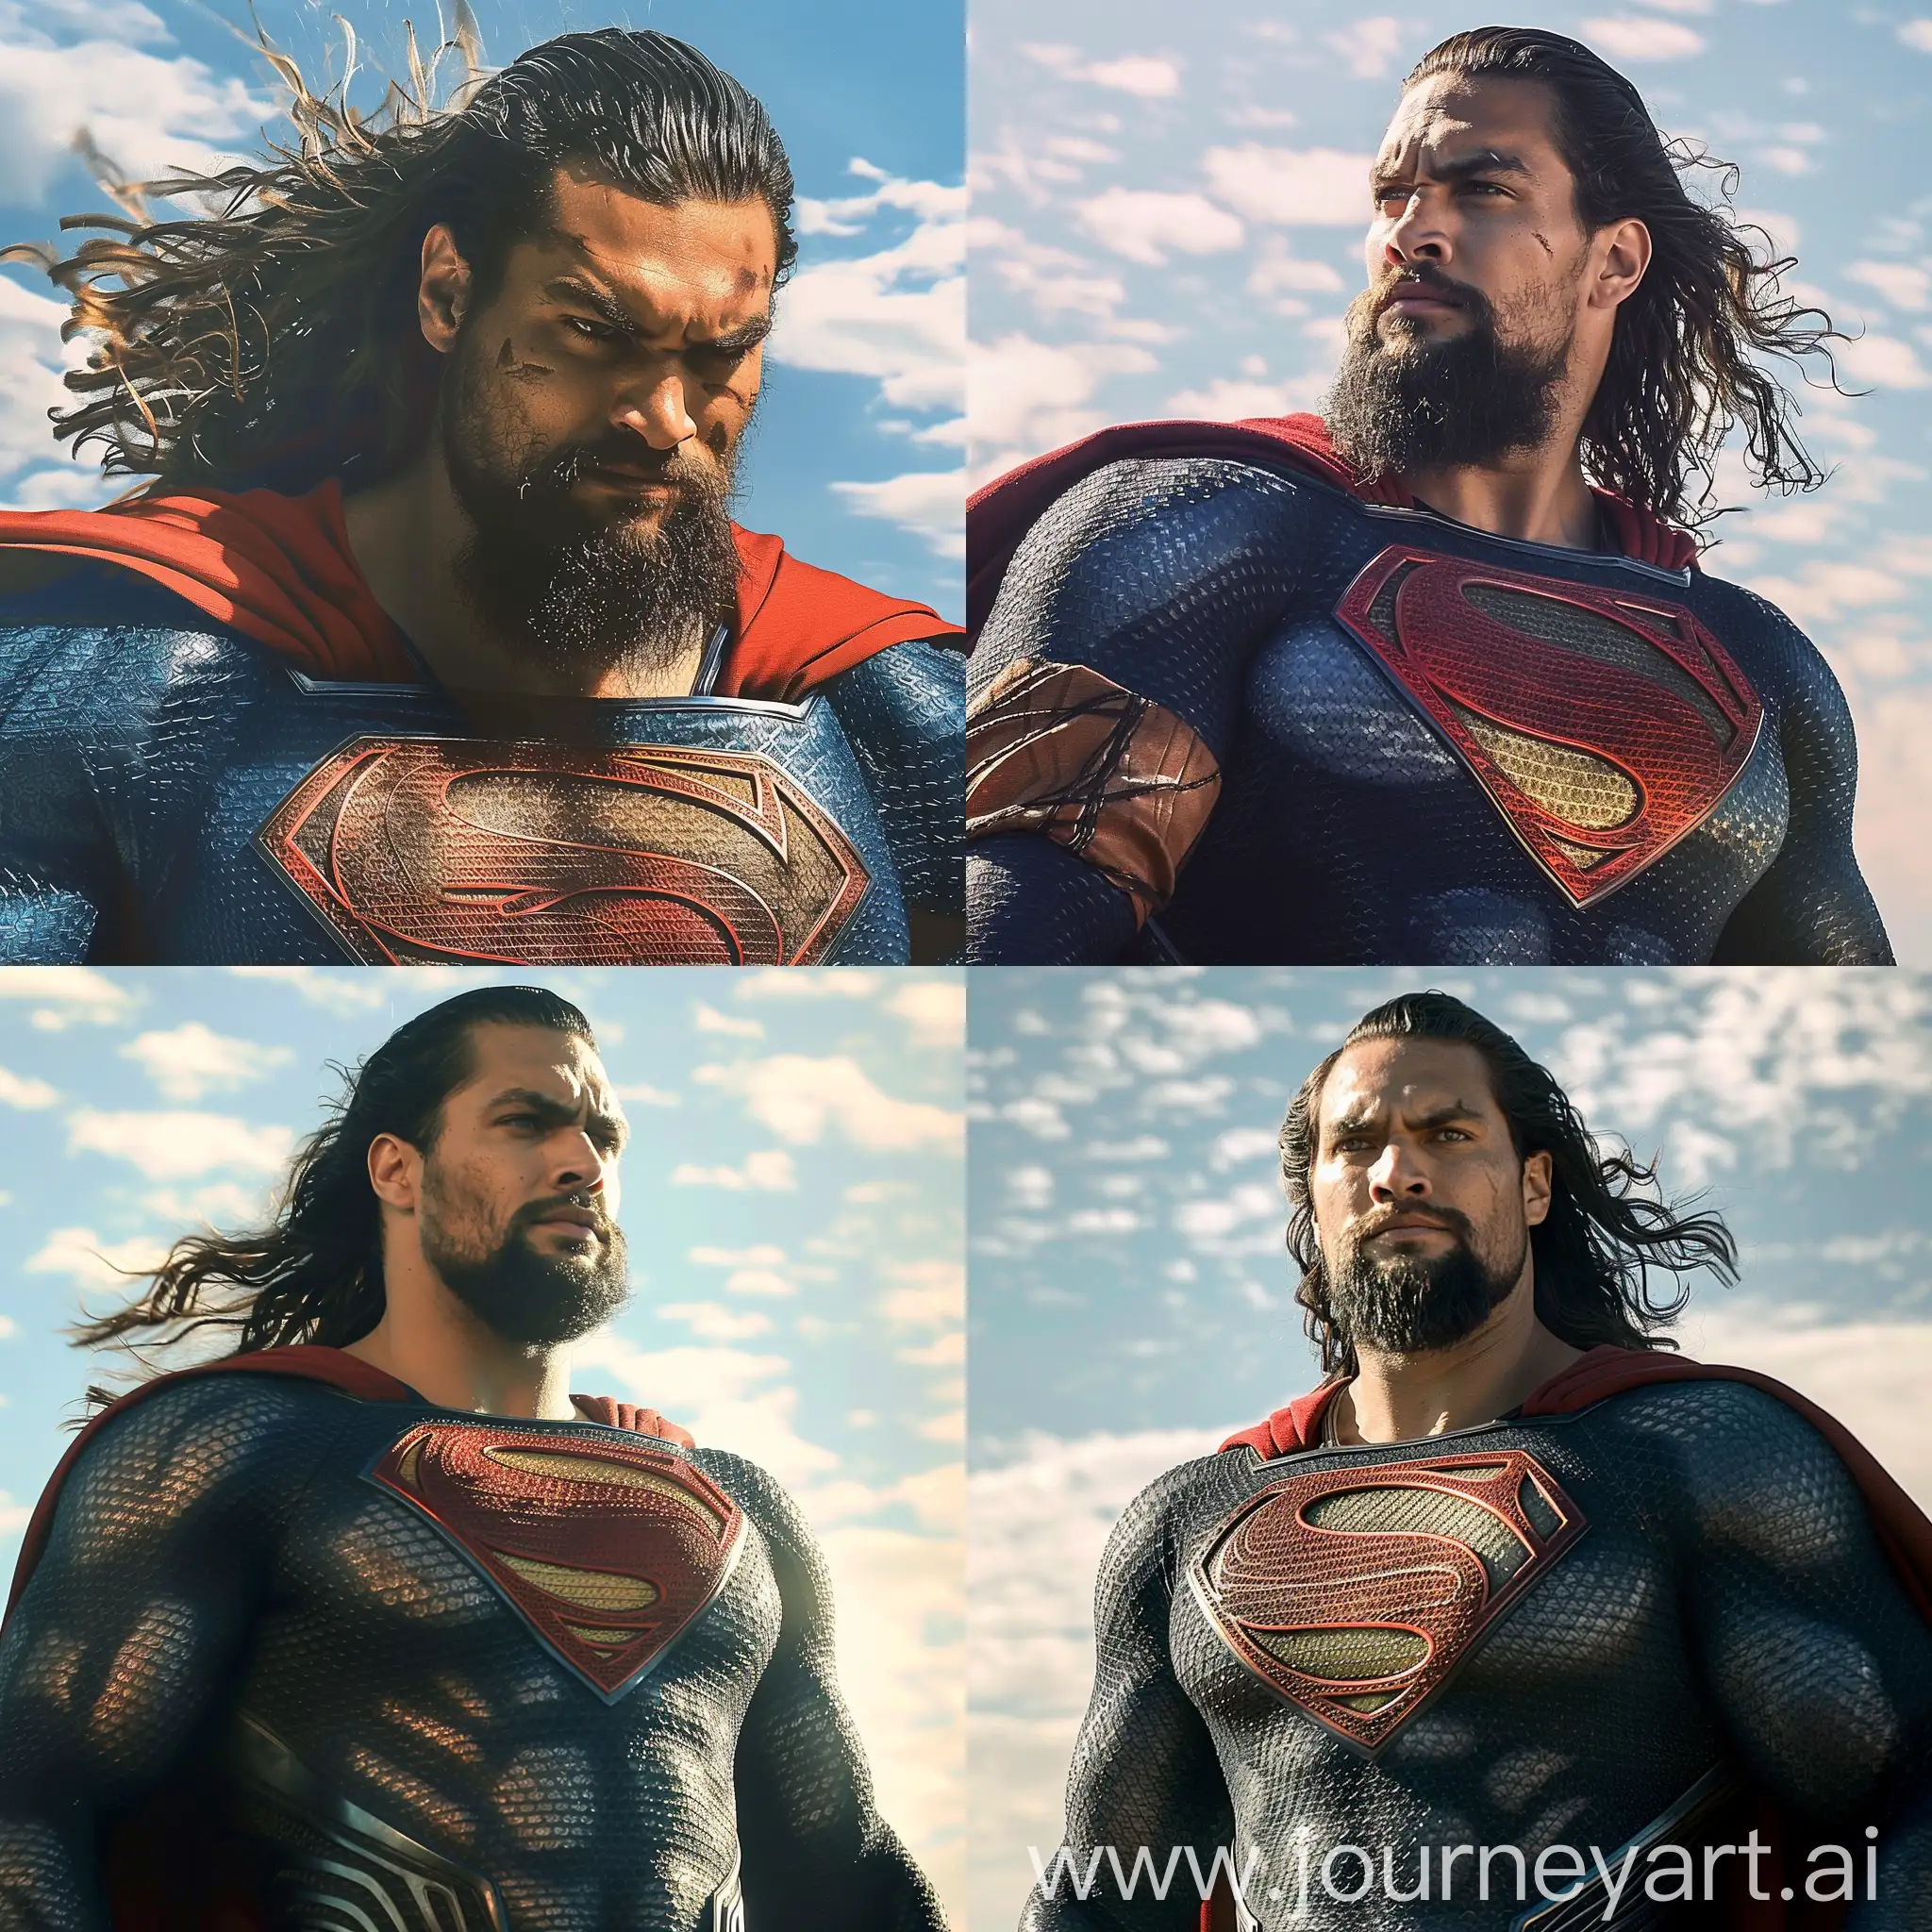 Jason-Momoa-Portrays-Brutal-Superman-in-Costume-Against-Sky